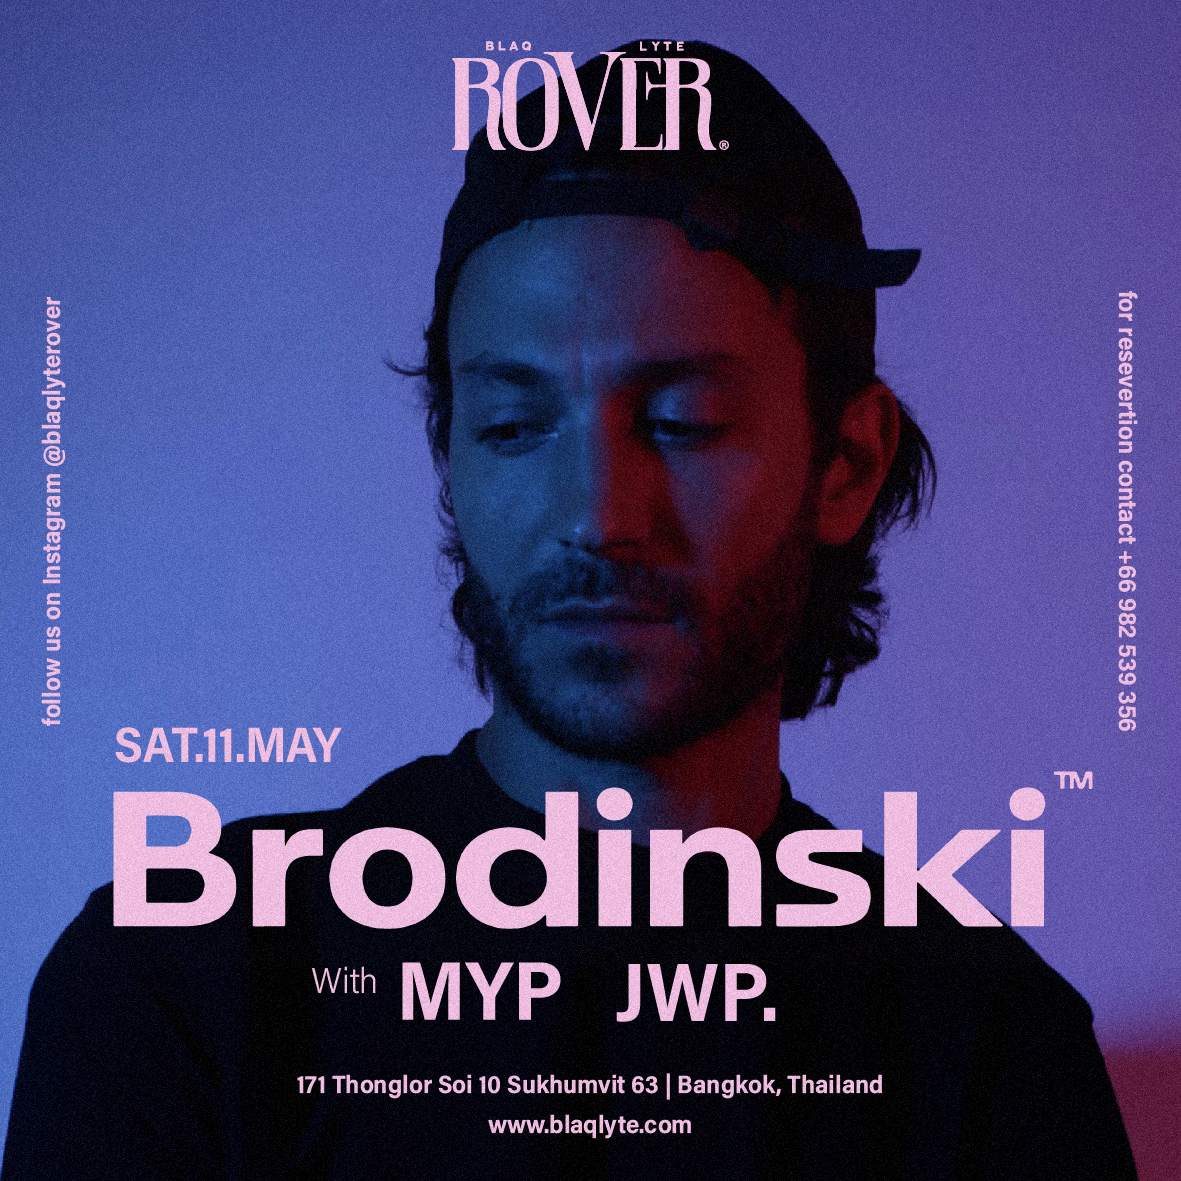 ROVER with 'Brodinski' - Página frontal